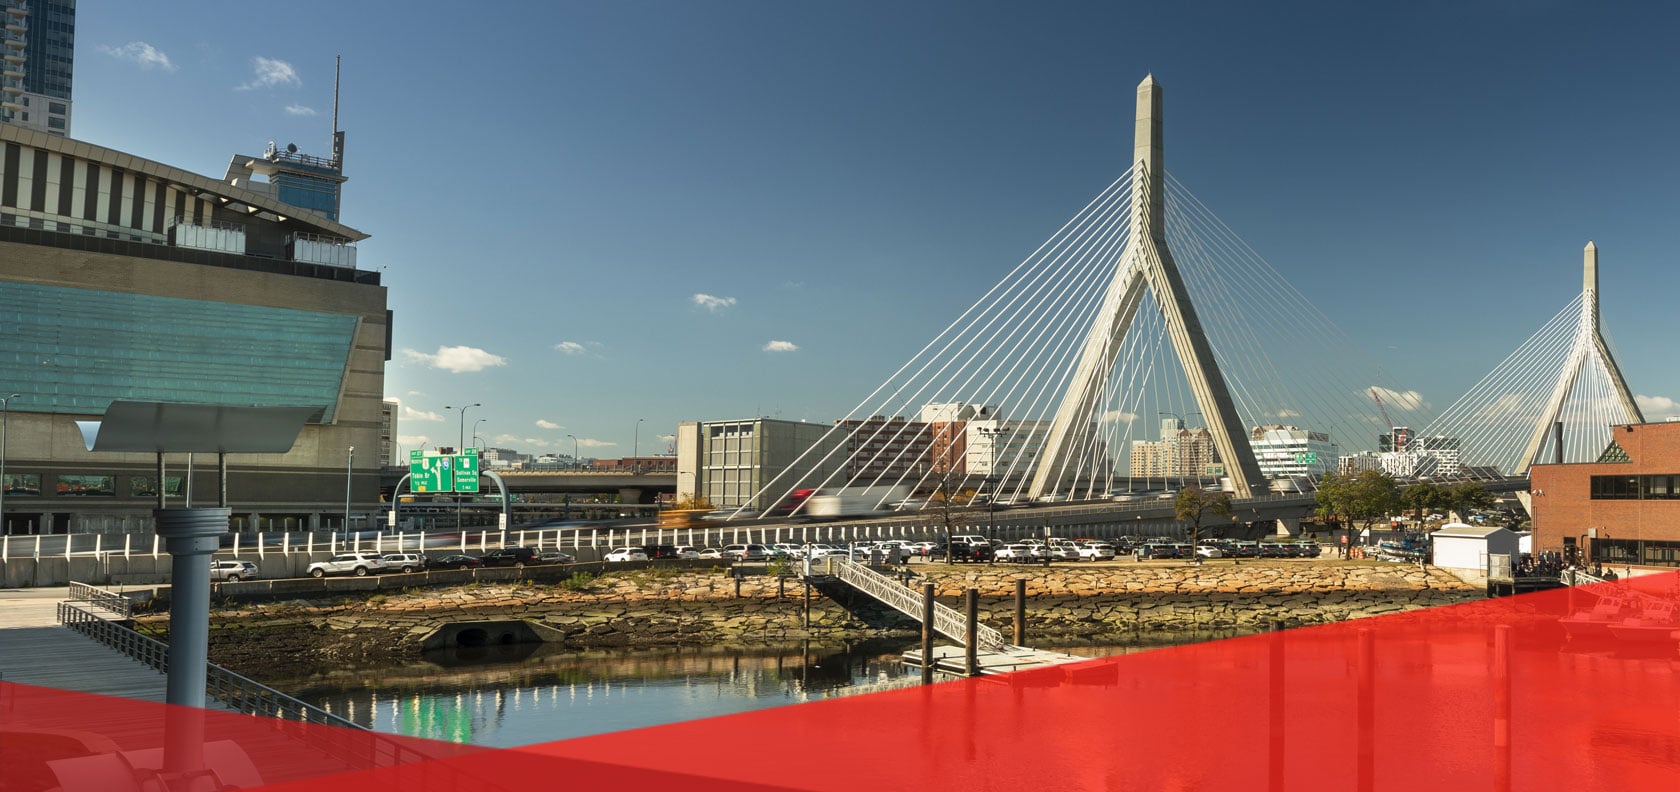 Boston, Massachusetts bridge and roadways